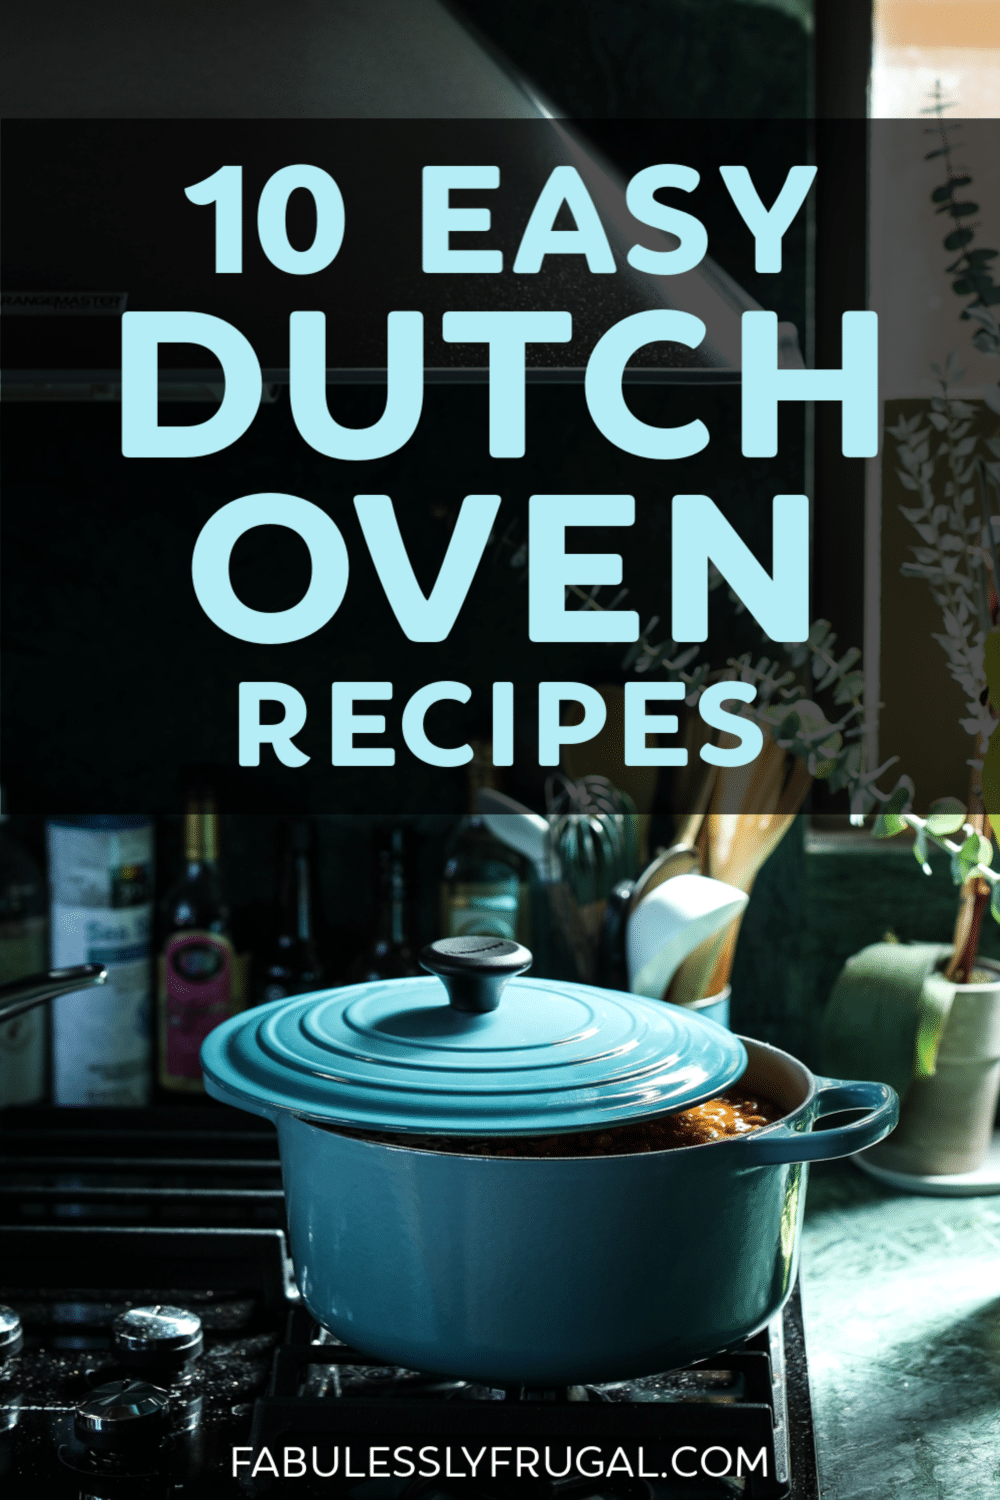 Easy dutch oven recipes